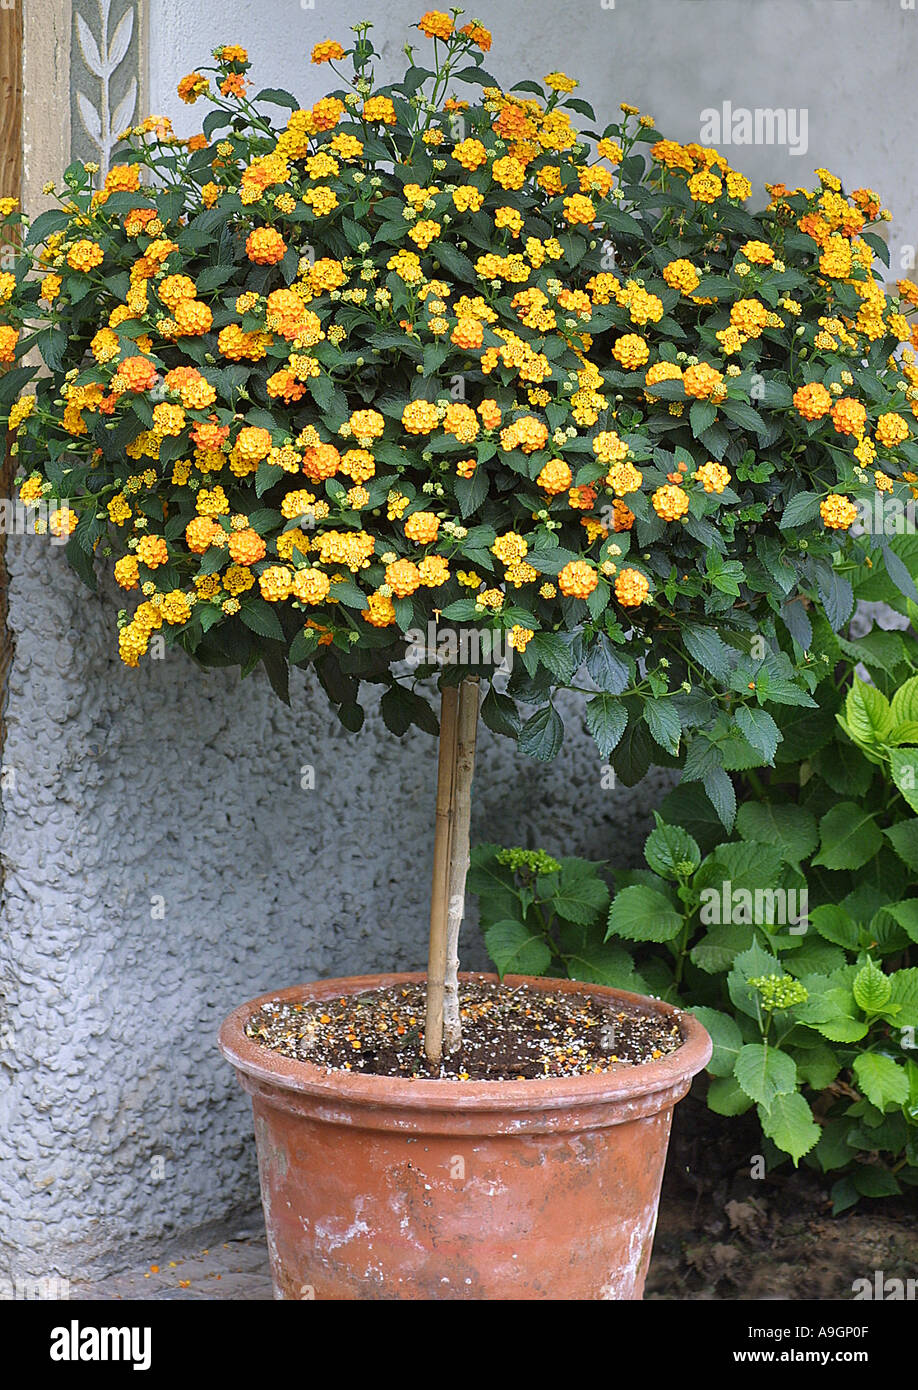 lantana-lantana-camara-planta-en-maceta-floreciendo-a9gp0f-1-jpg.1557115